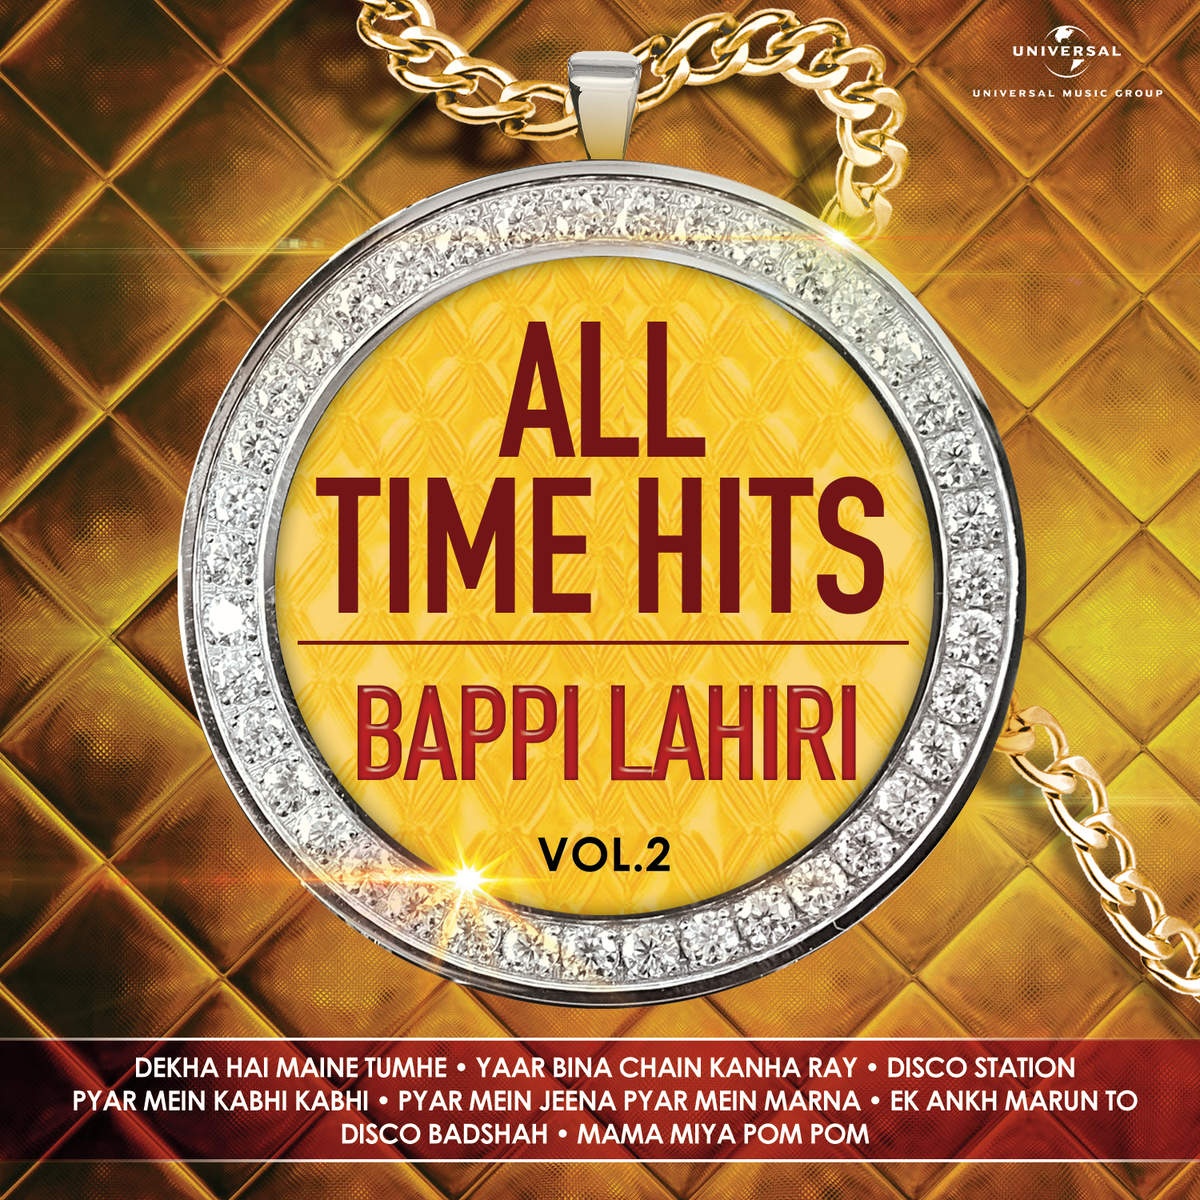 All Time Hits  Bappi Lahiri, Vol. 2